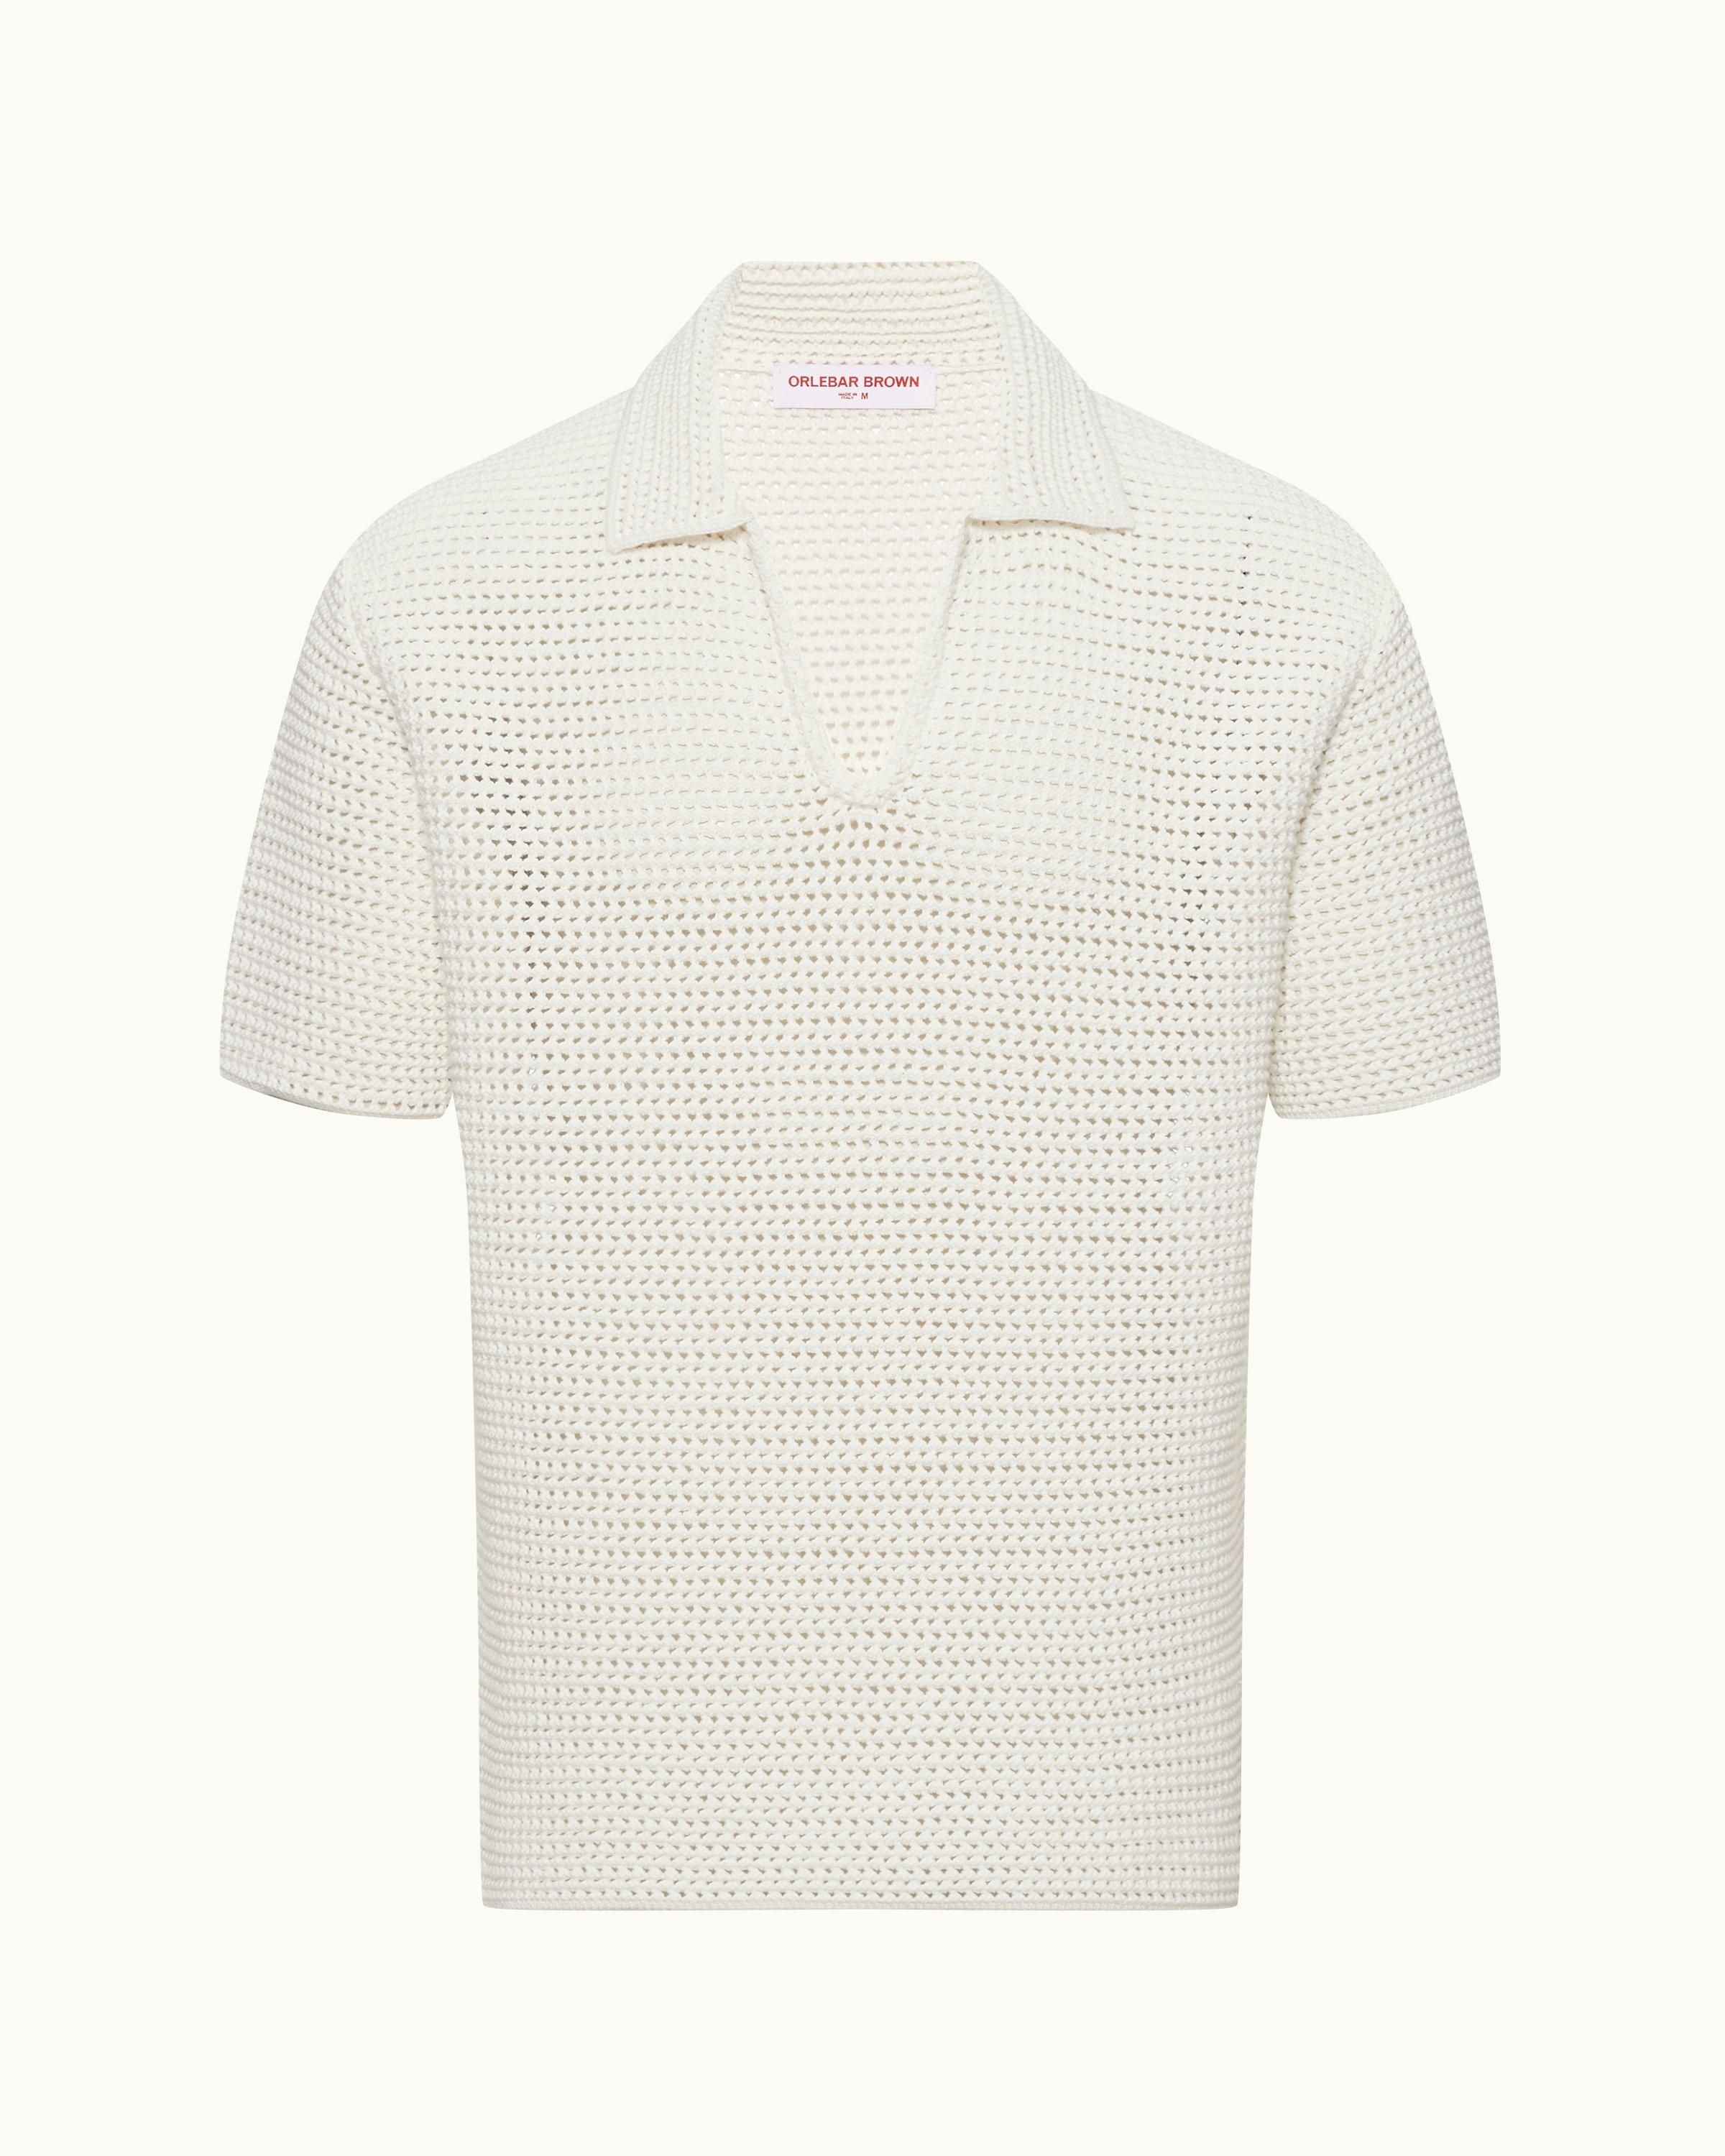 Men's Luxury Brand Polo Shirt, Luxury Brand Polo Shirts Men